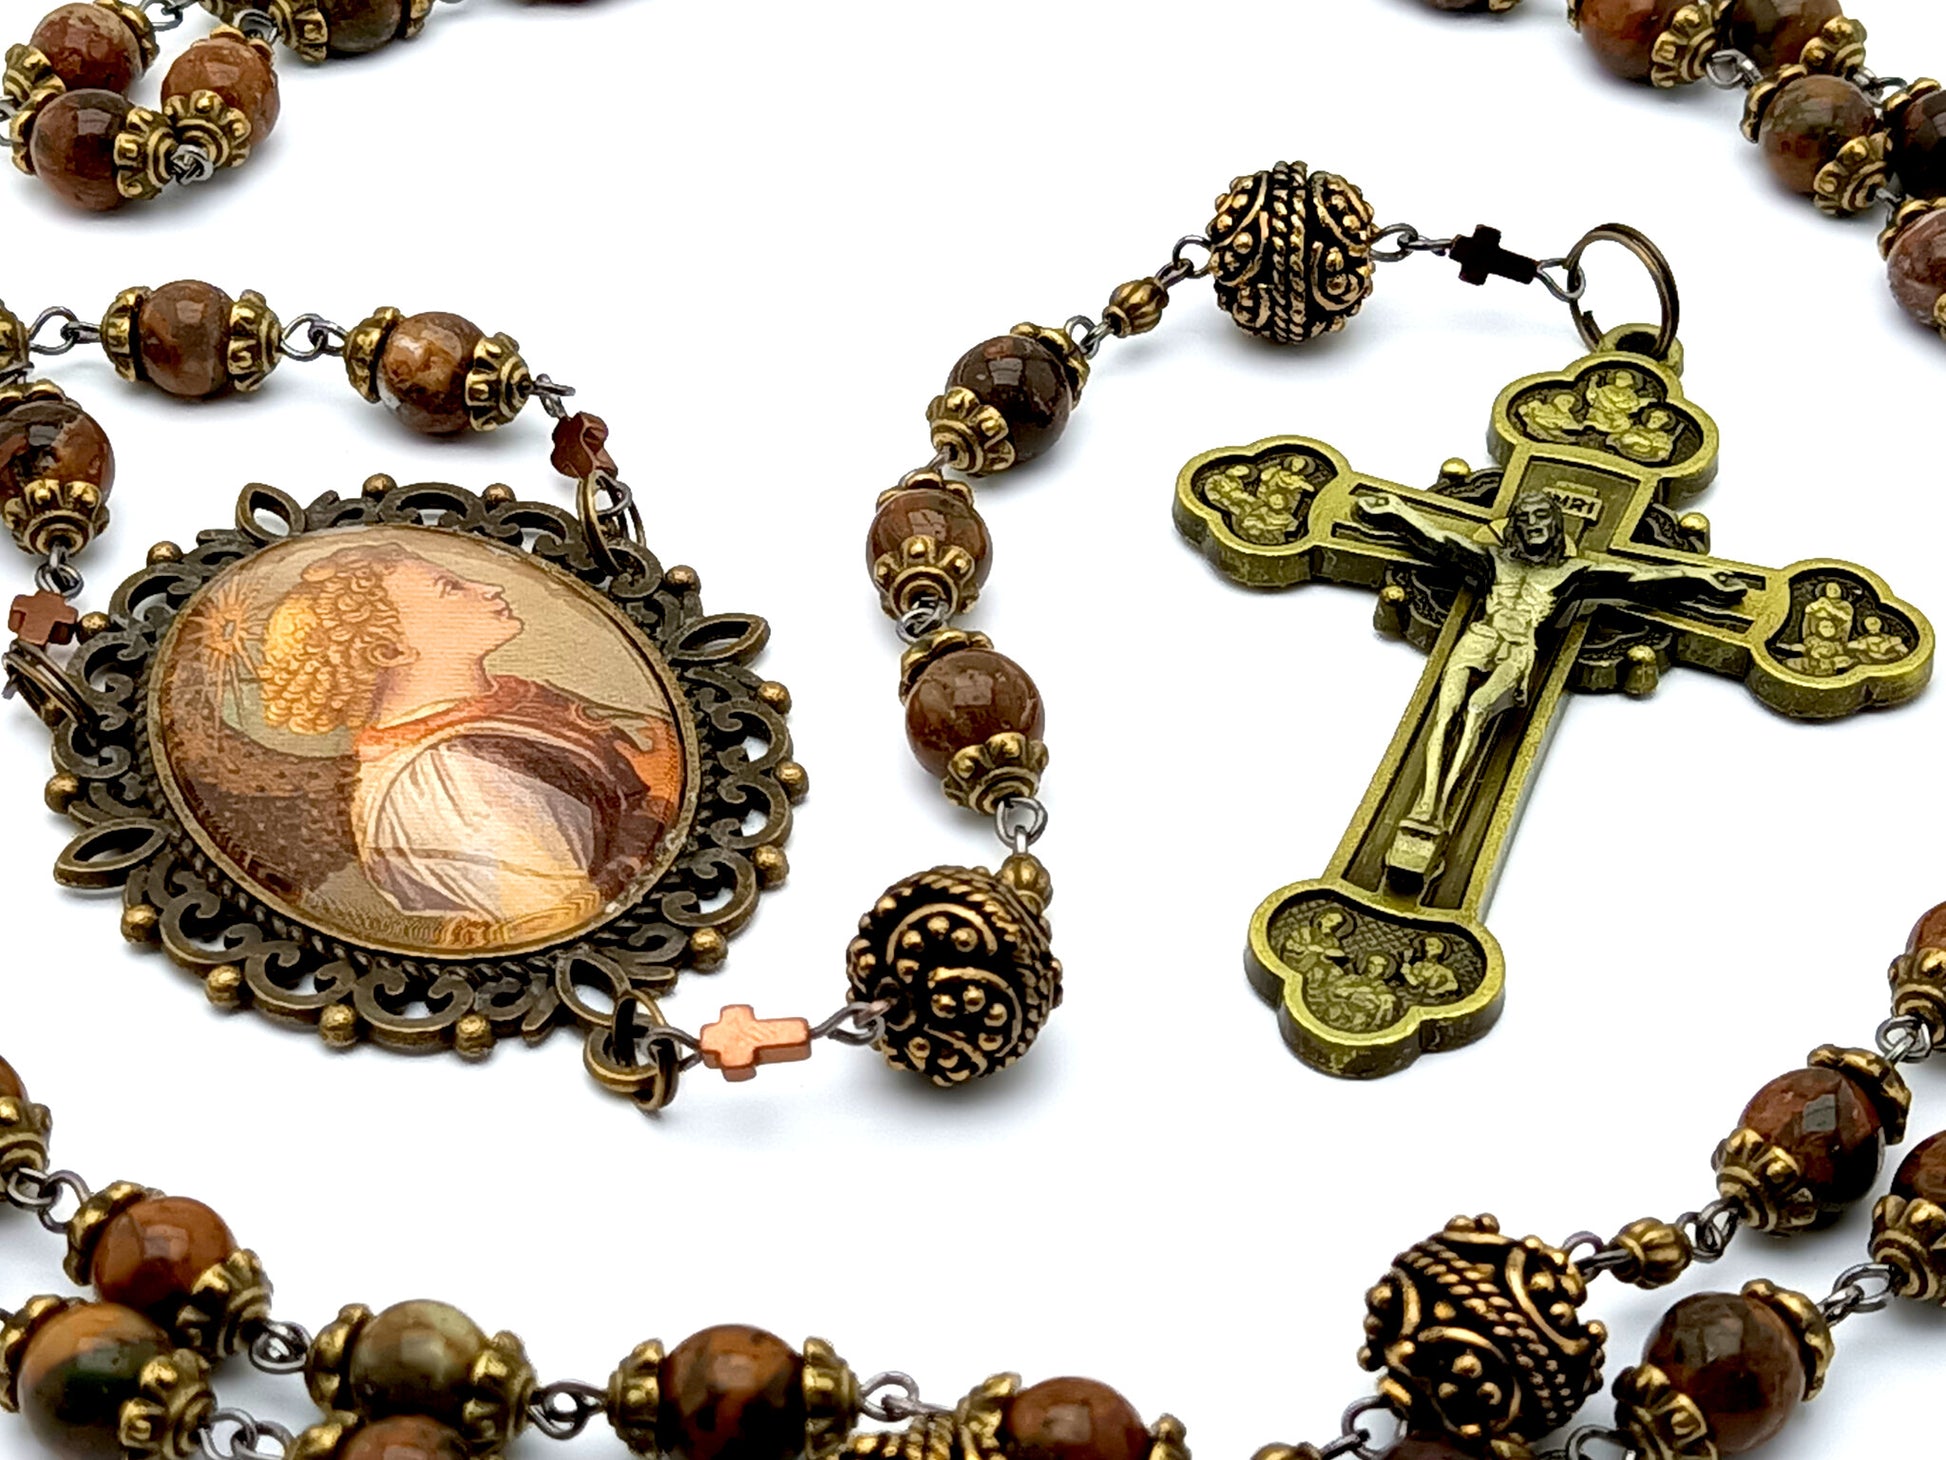 Saint Angel Gabriel unique rosary beads with jasper gemstone beads and vintage style Saint Angel Gabriel medal and twelve apostles brass crucifix.